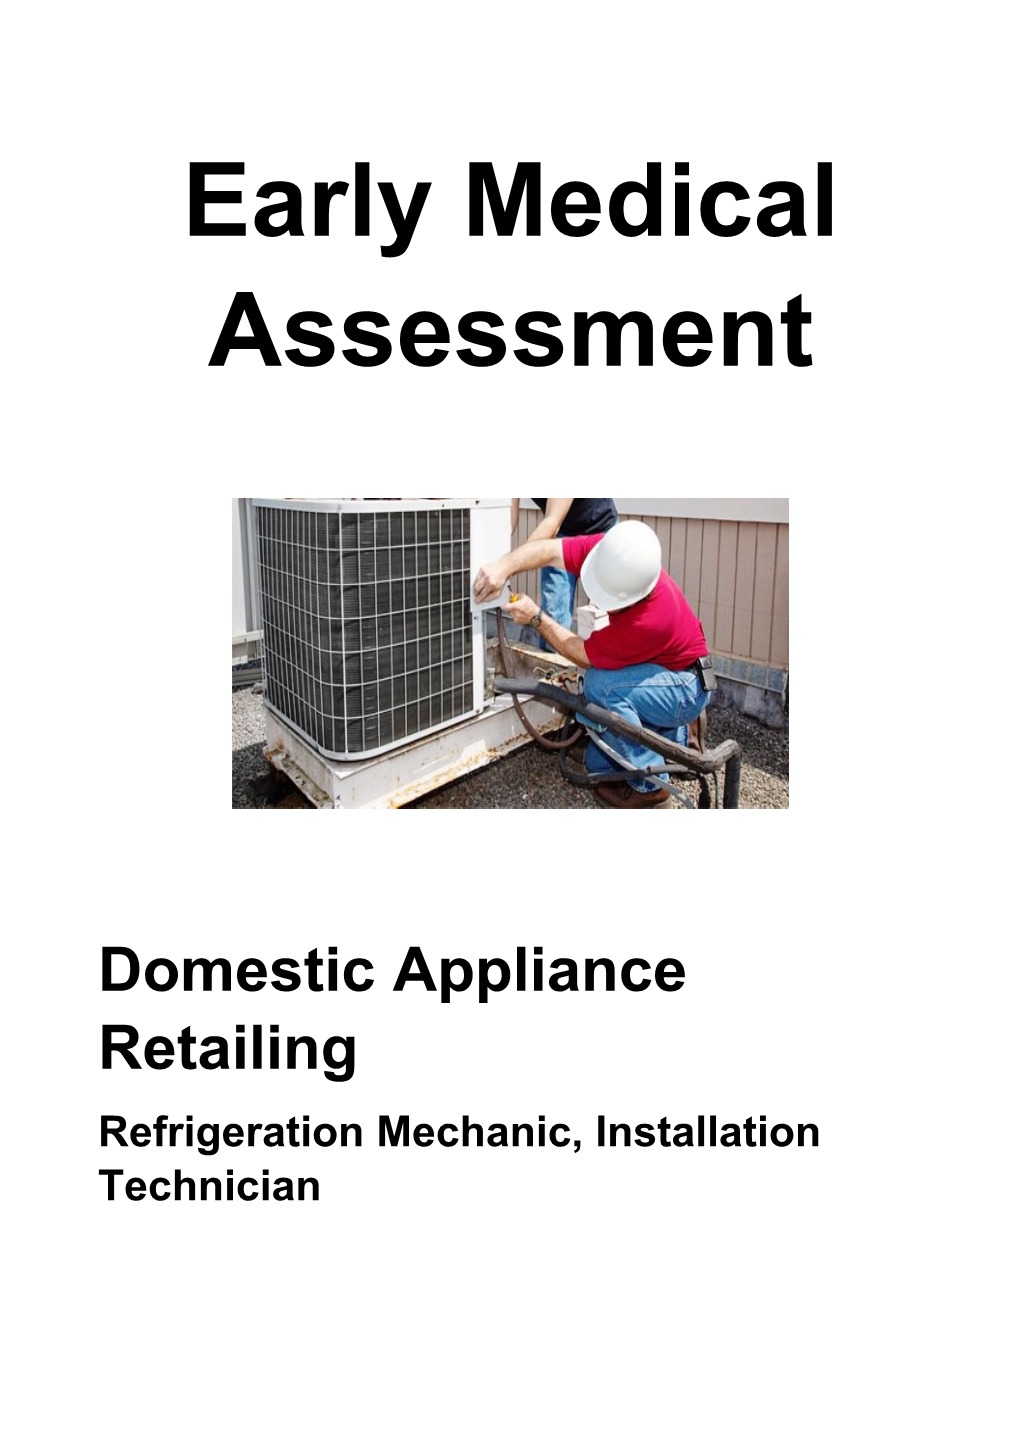 Domestic Appliance Retailing - Refrigeration Mechanic and Installation Technician